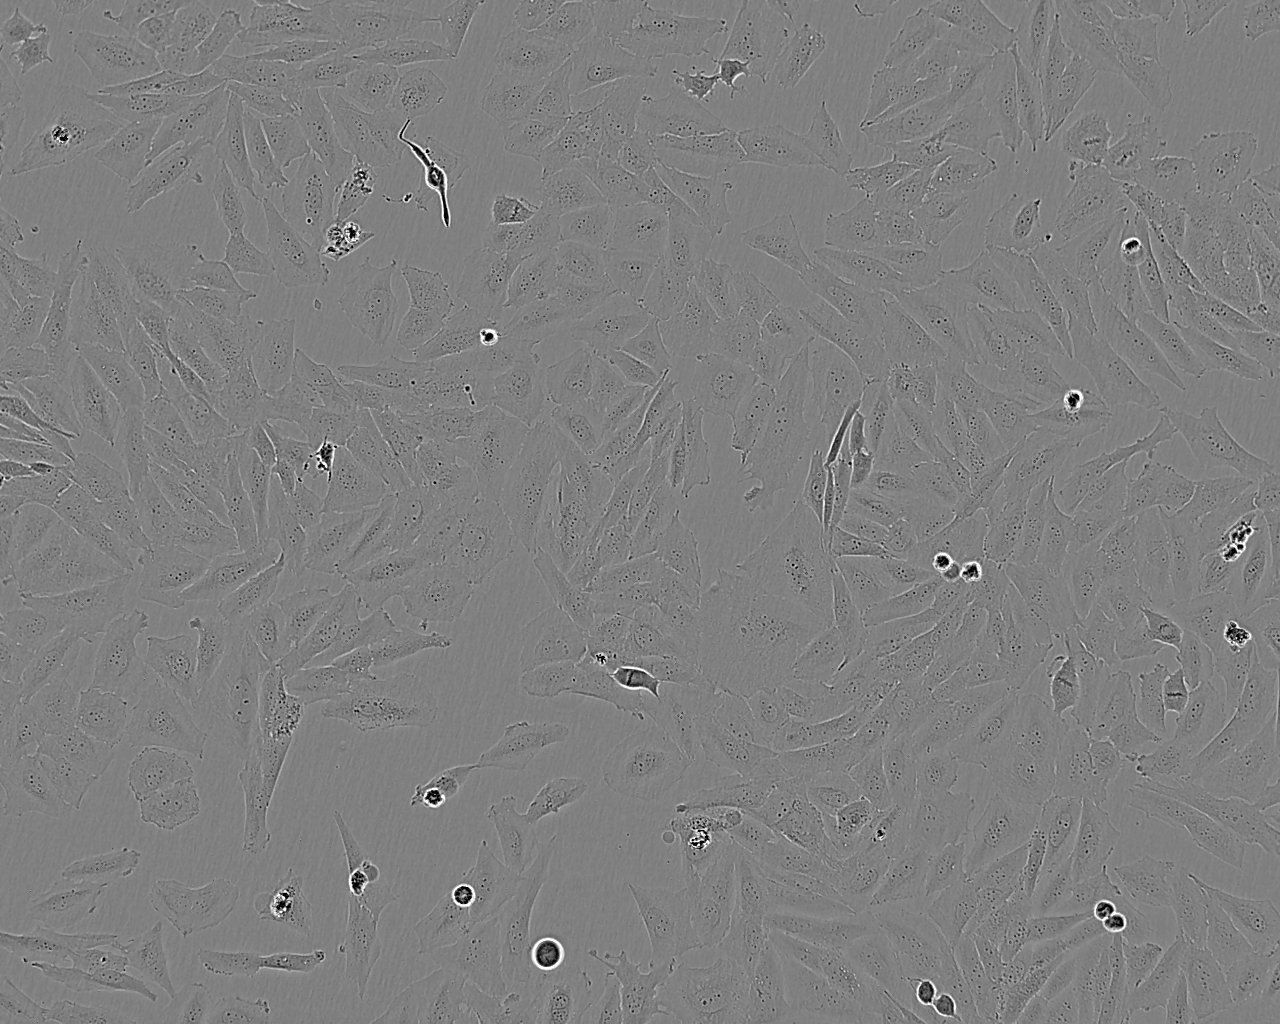 NCI-H1618 epithelioid cells人小细胞肺癌细胞系,NCI-H1618 epithelioid cells